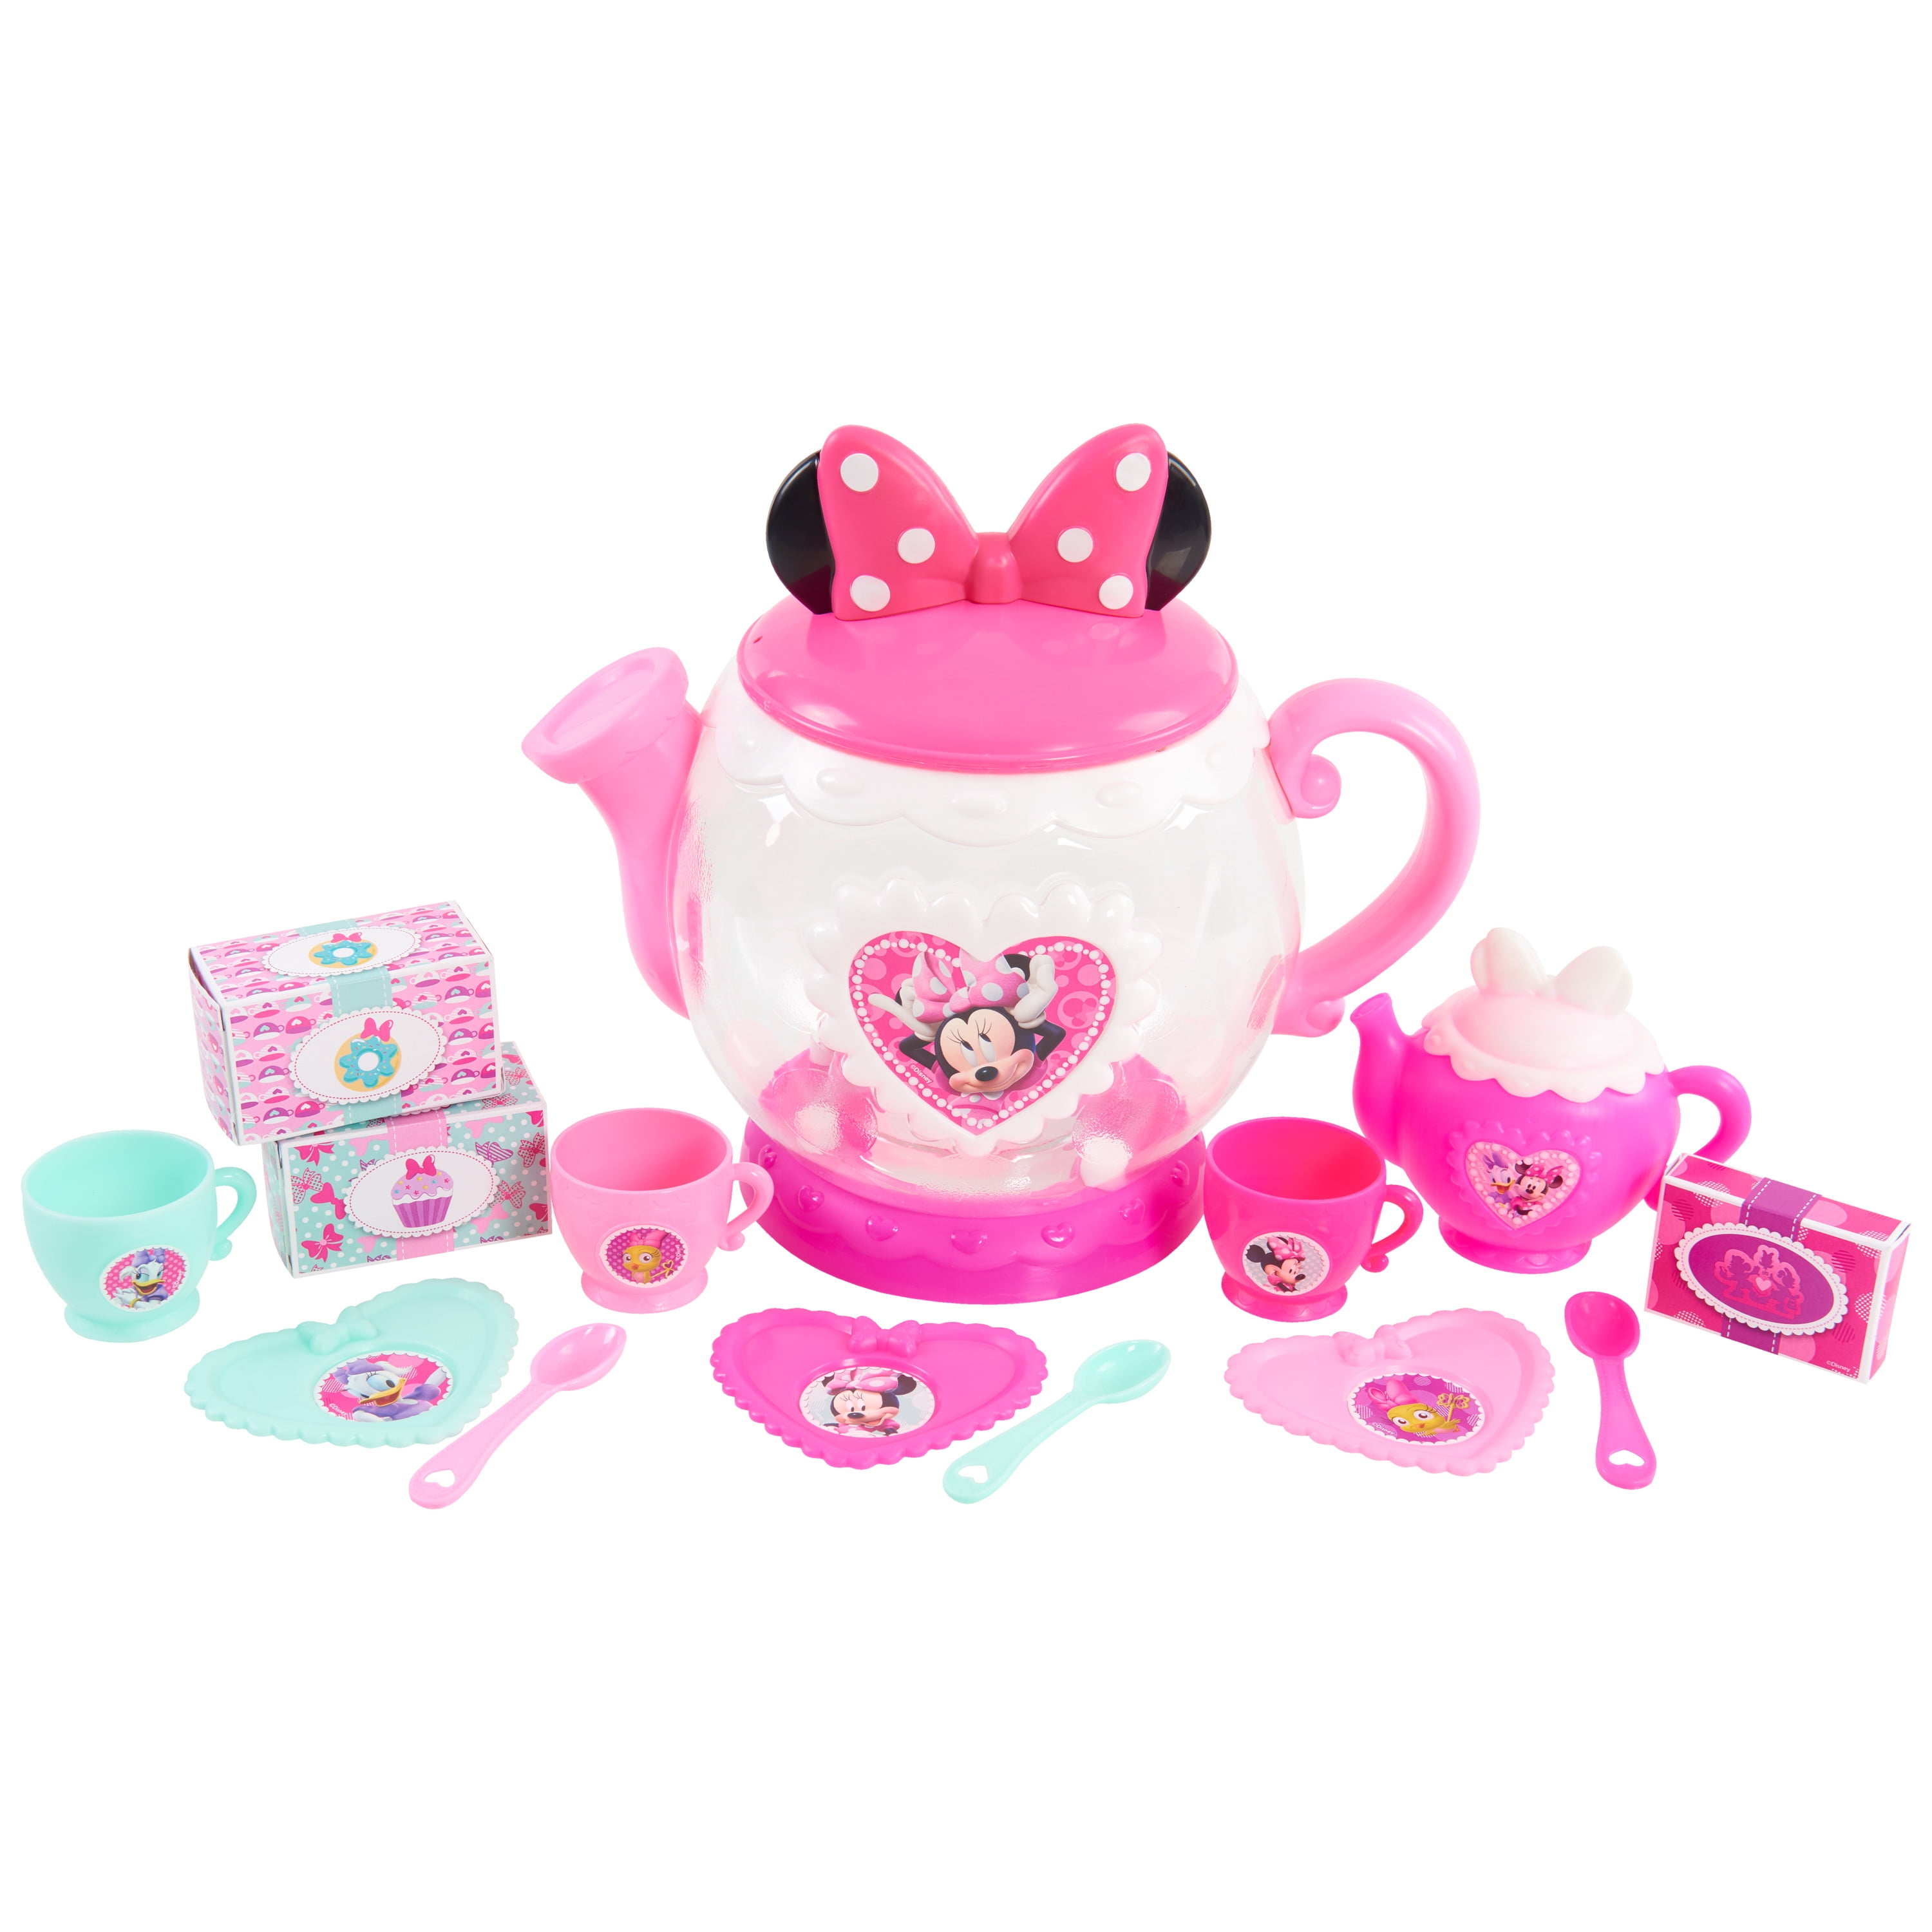 Little Girls Teapot Tea Party Purse Birthday Dress Up Toys SPRING 002 